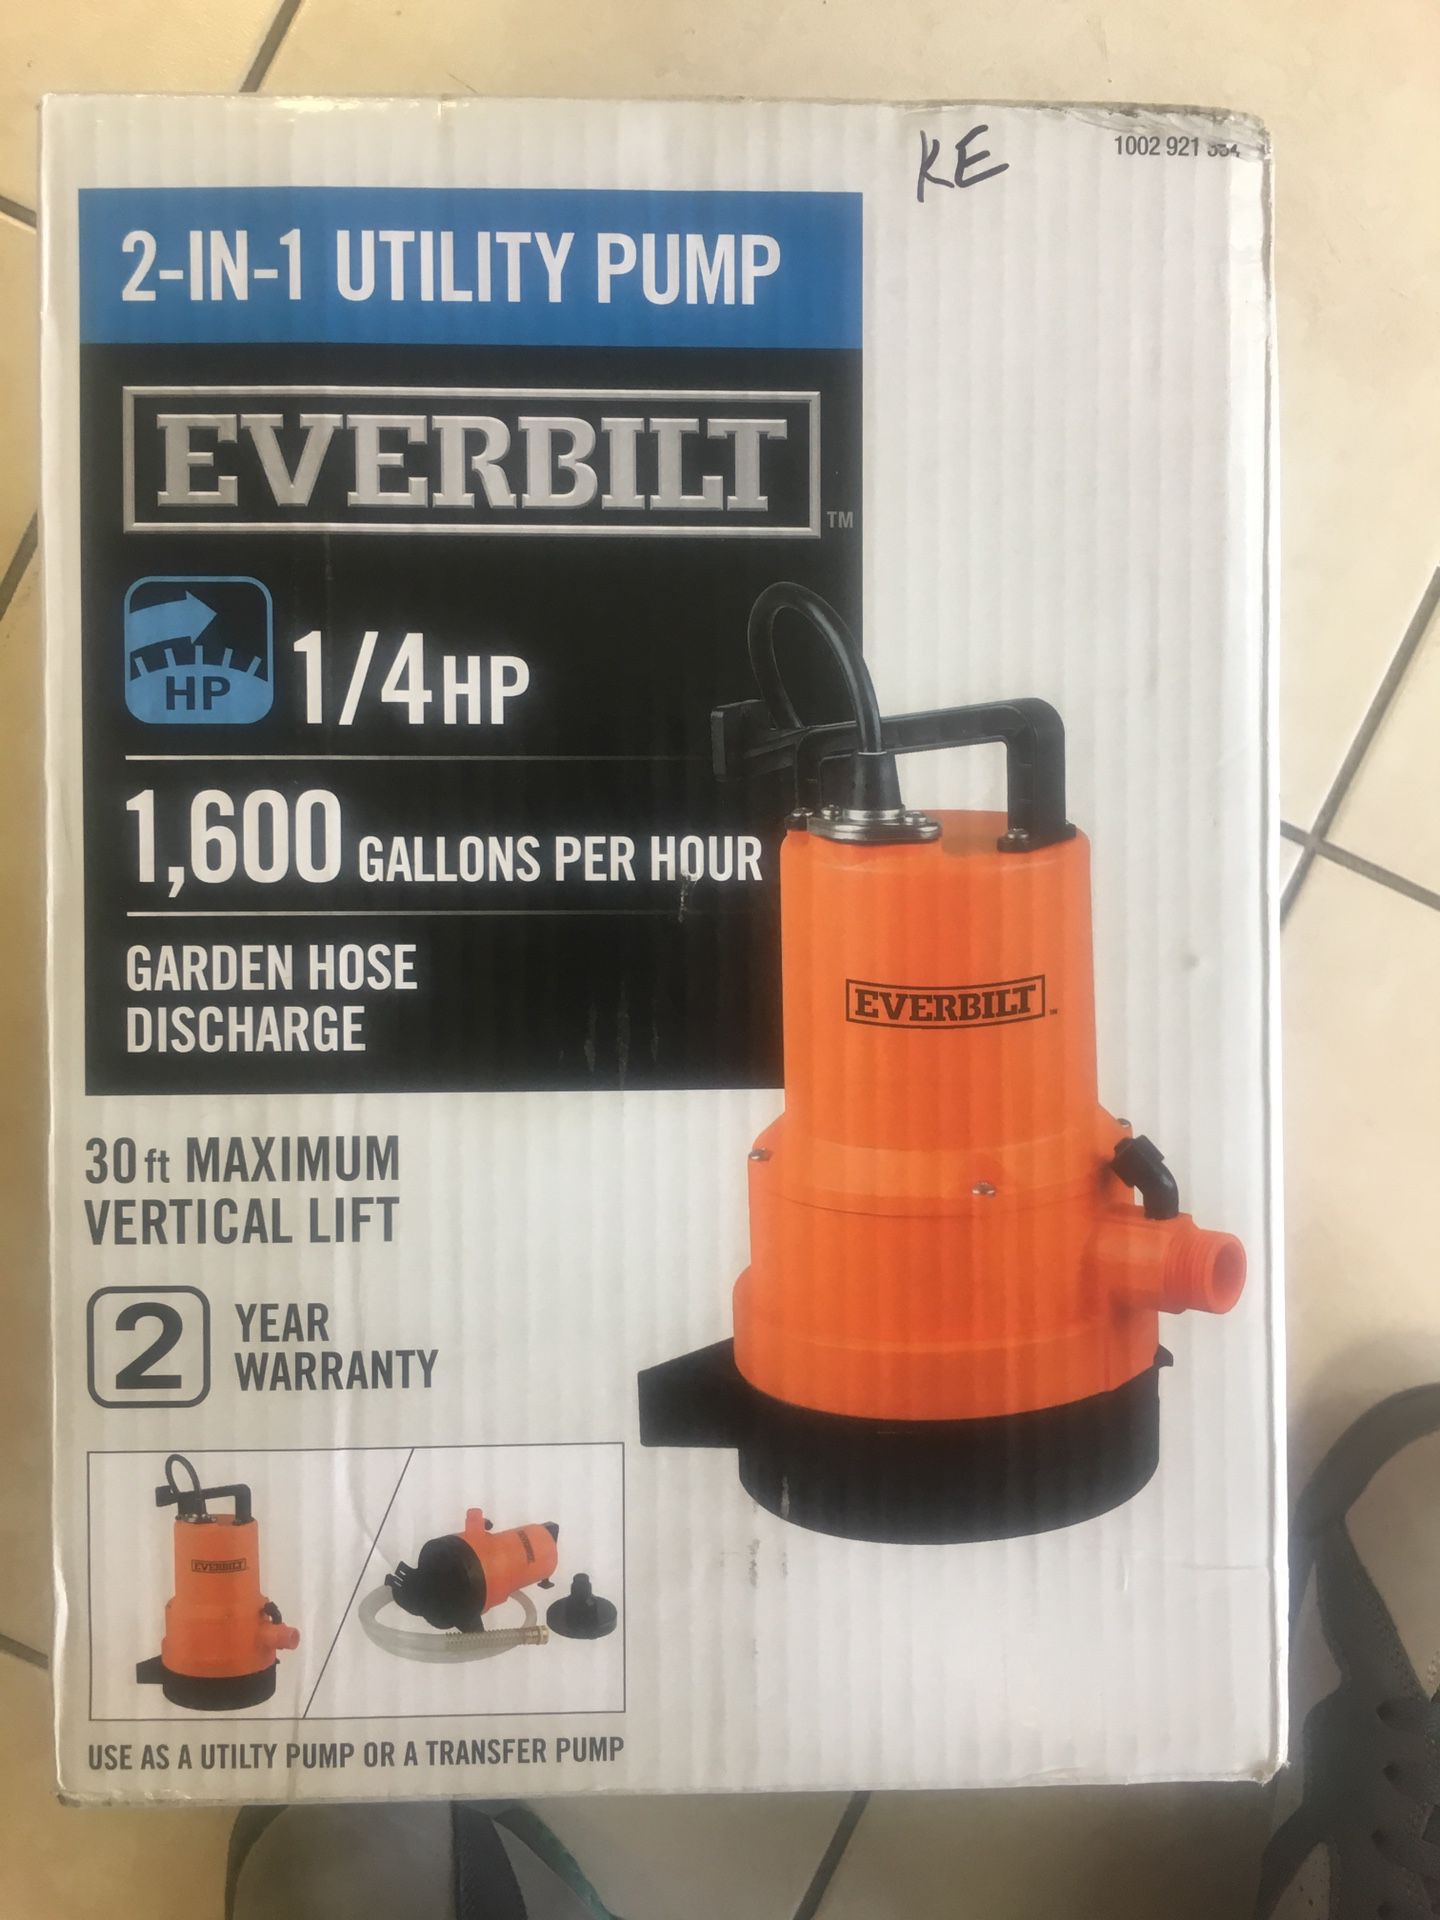 Everbilt 2-IN-1 Utility Pump